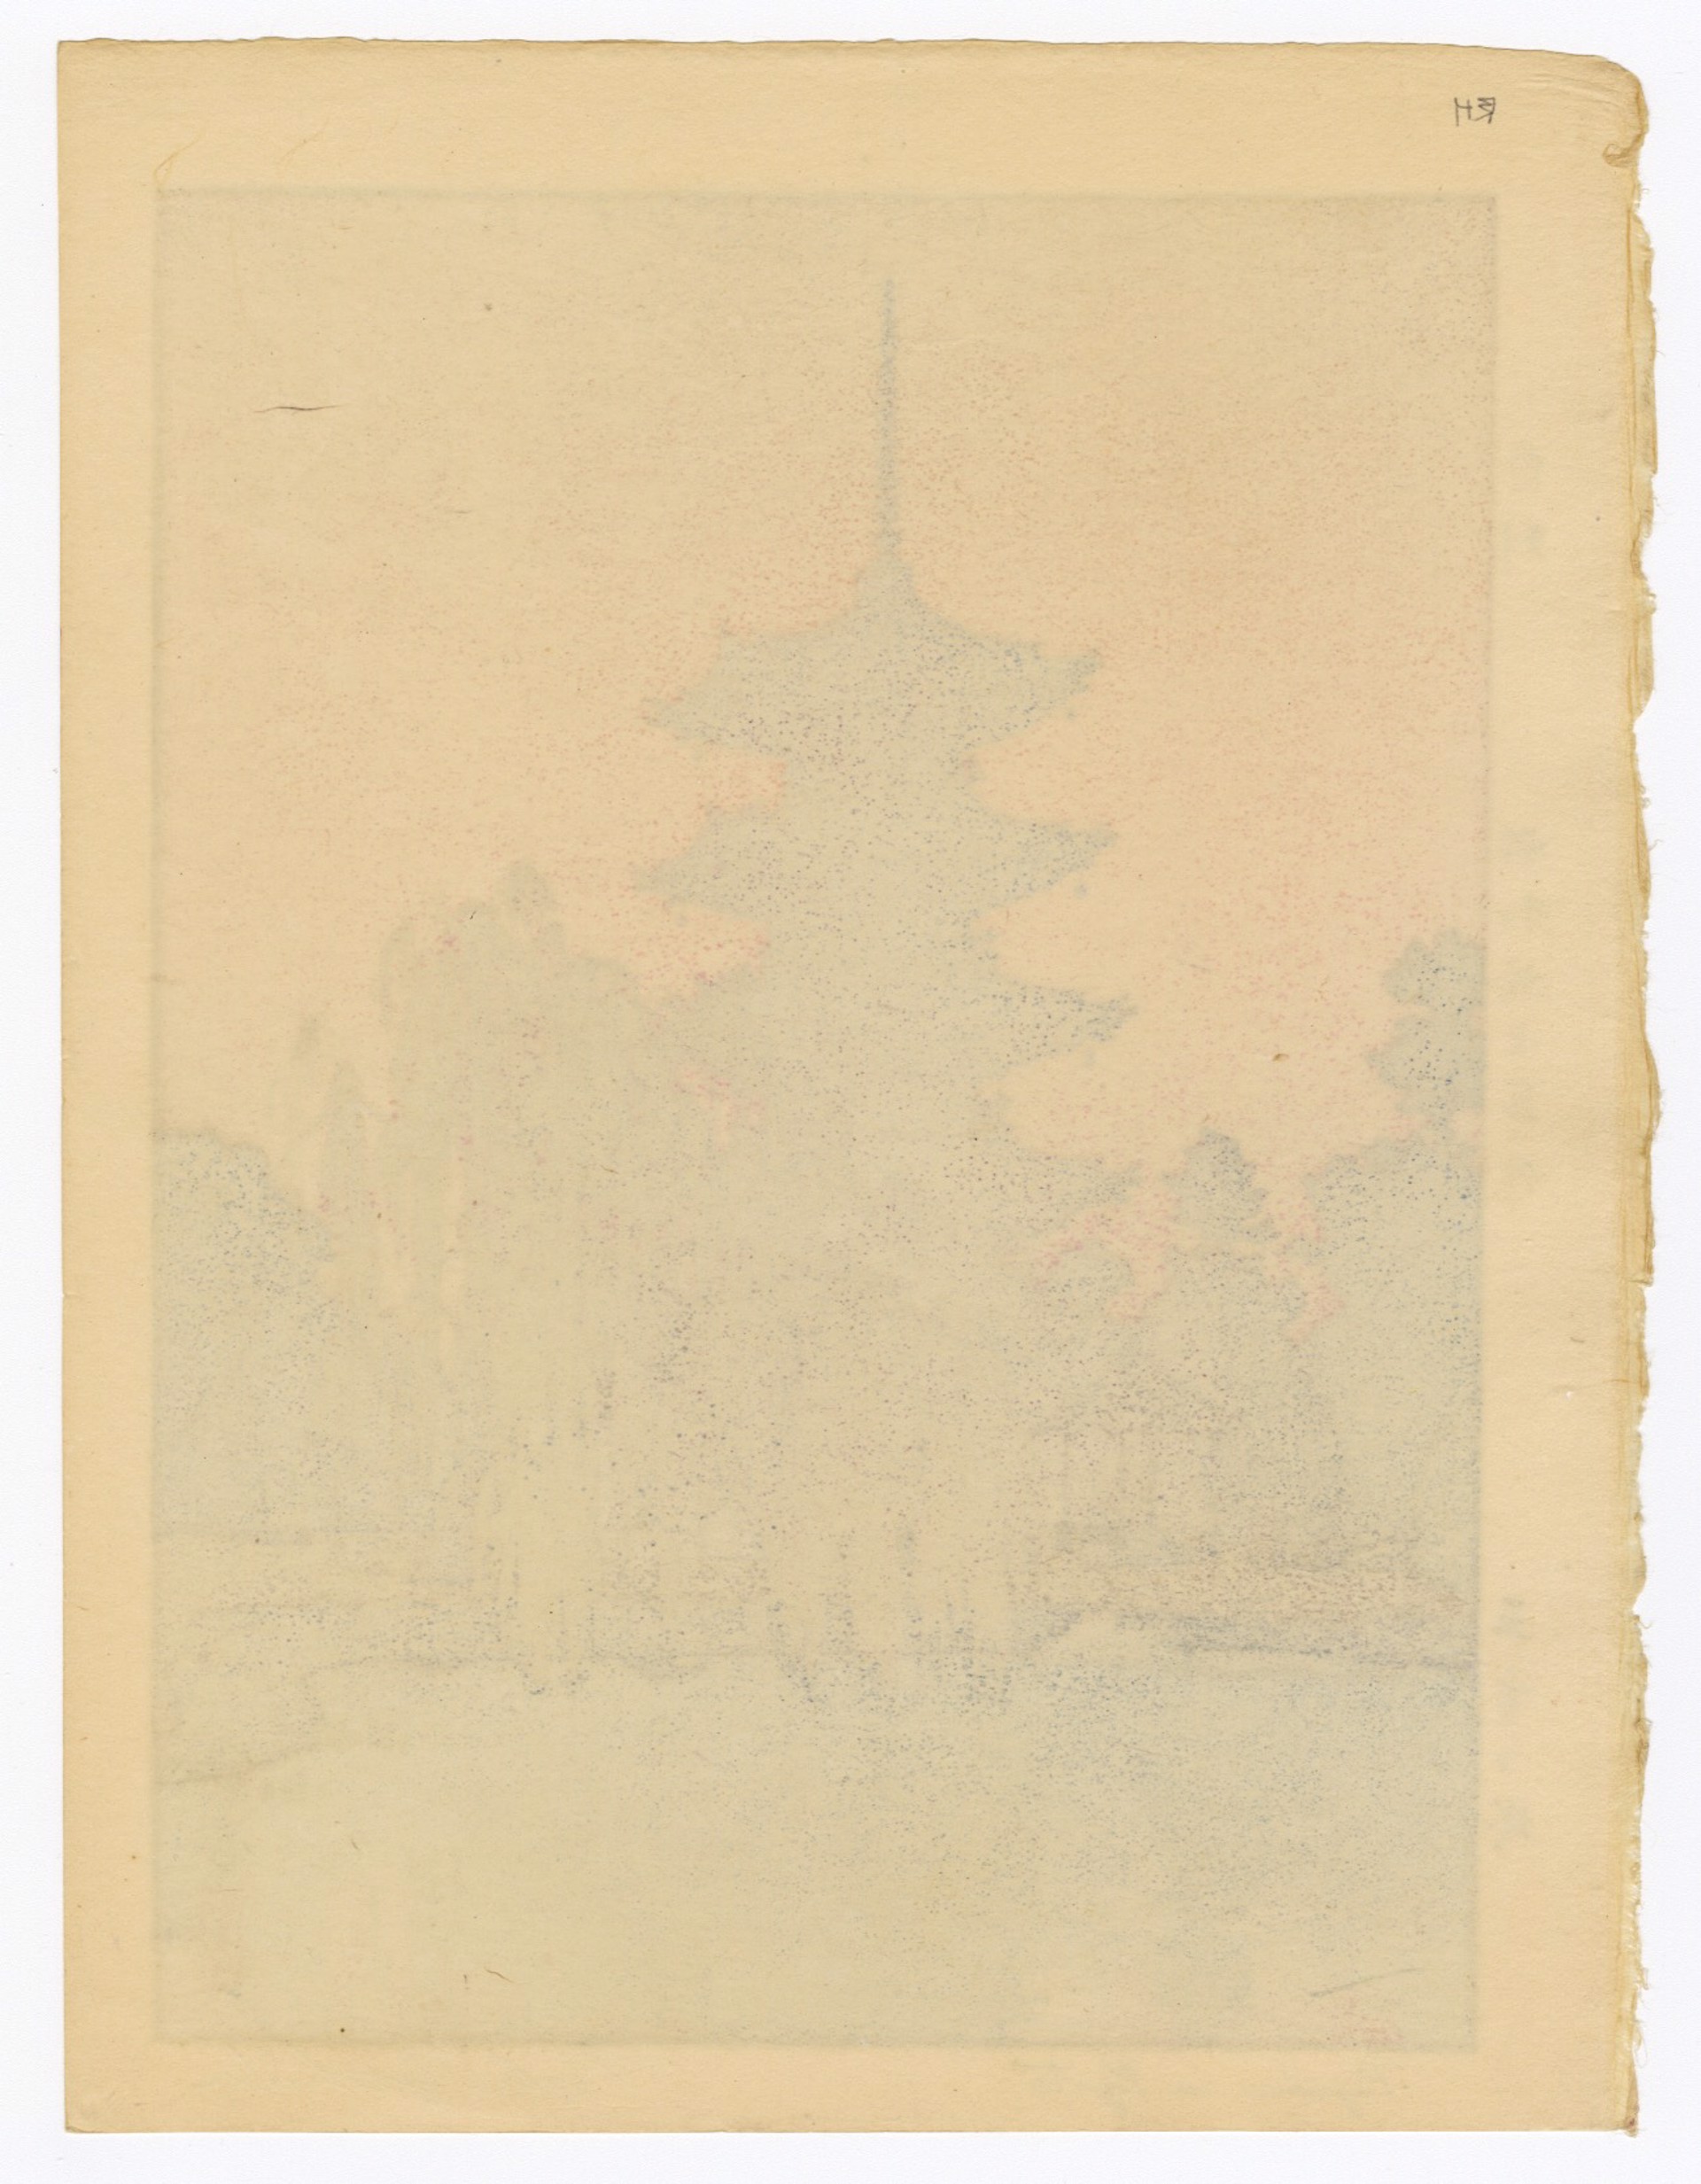 Pagoda in Kyoto by Toshi Yoshida